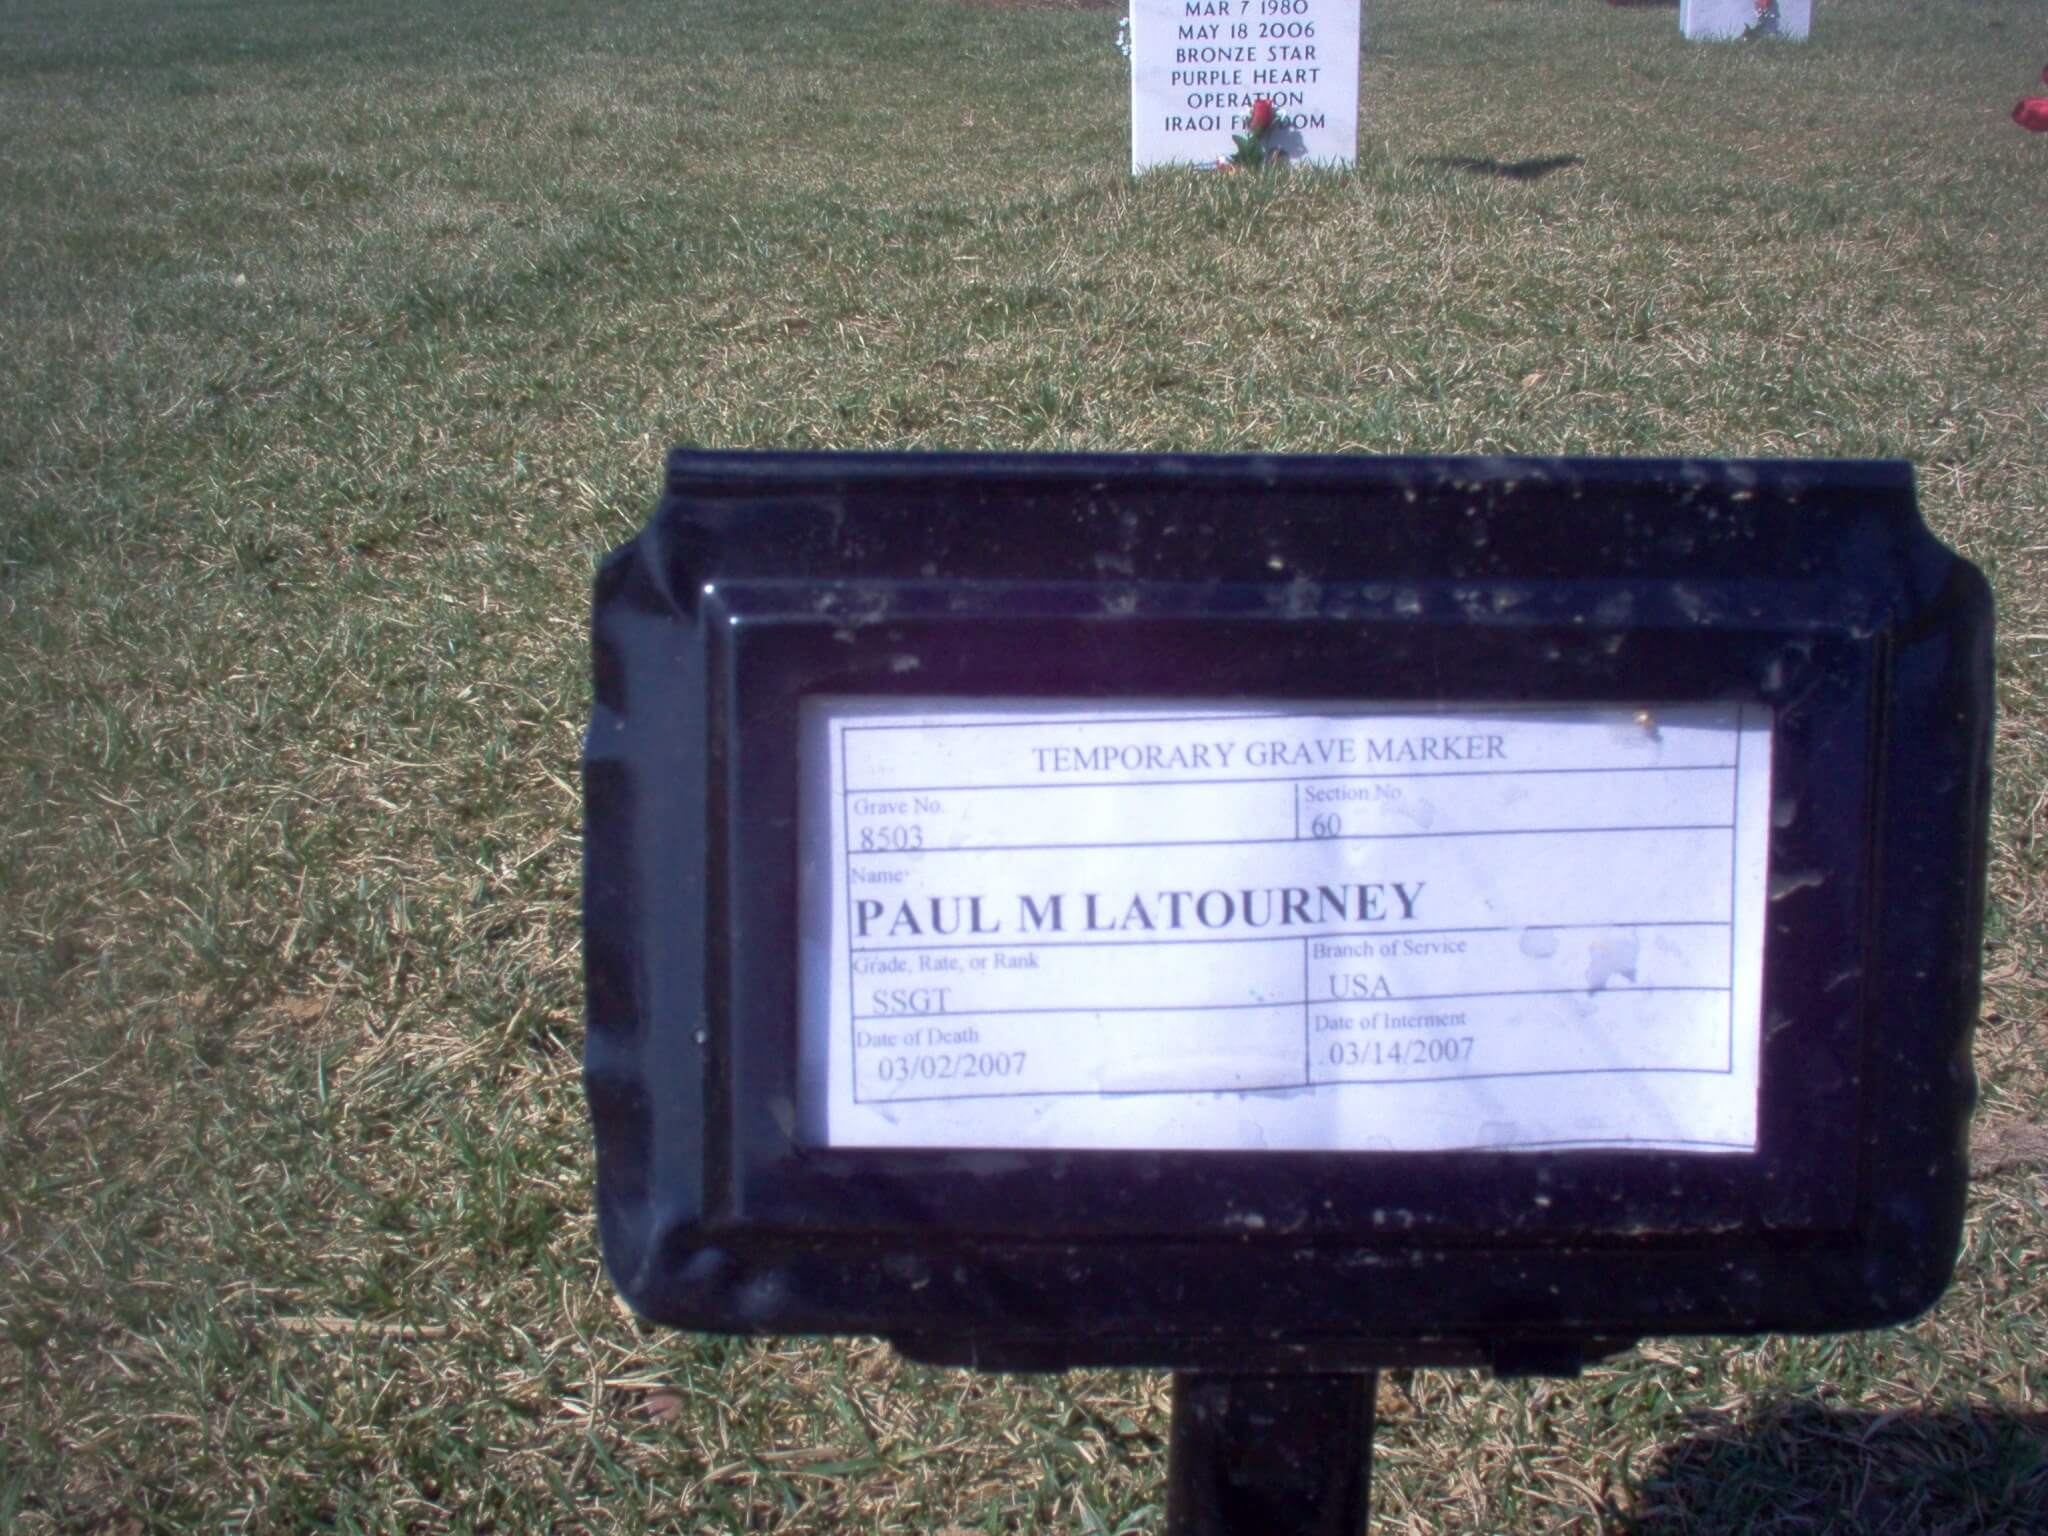 pmlatourney-gravesite-photo-march-2007-001